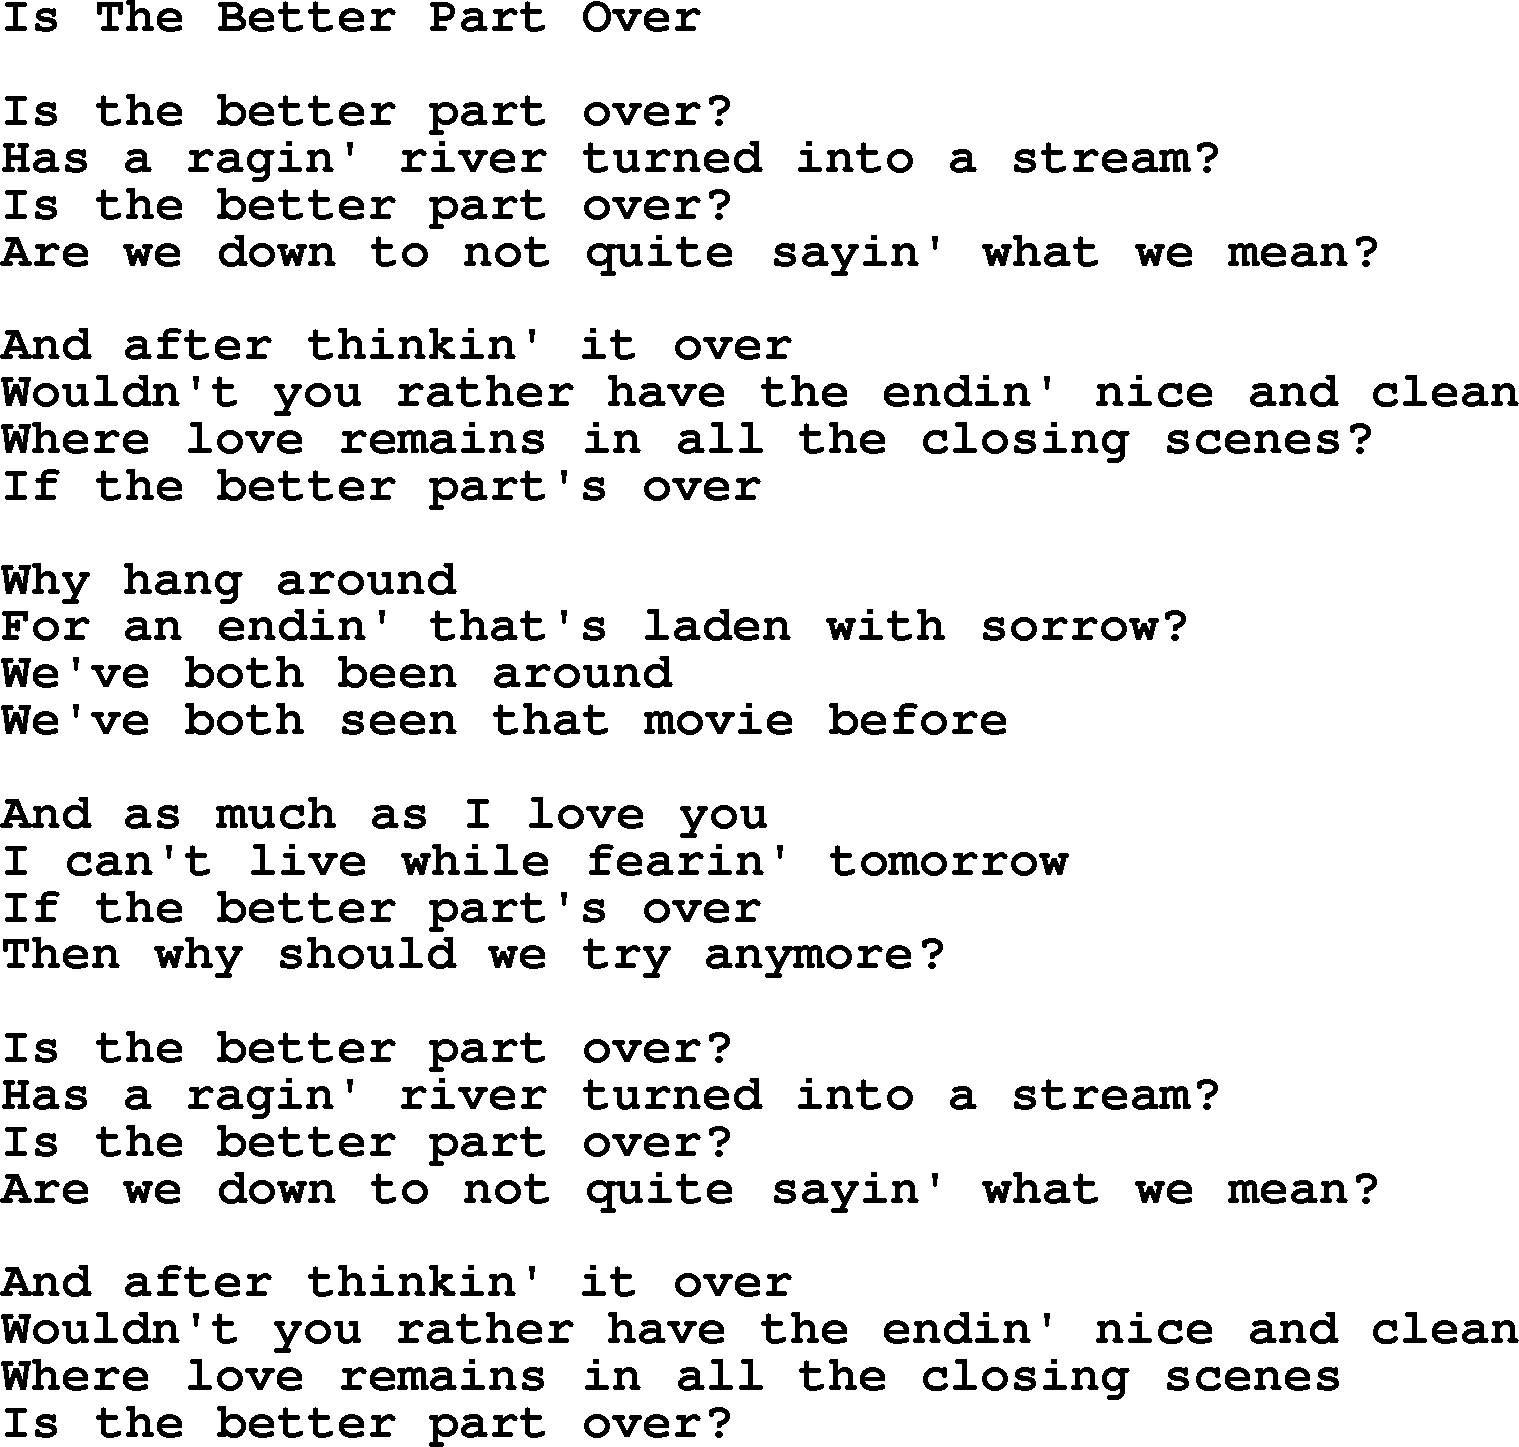 Willie Nelson song: Is The Better Part Over lyrics